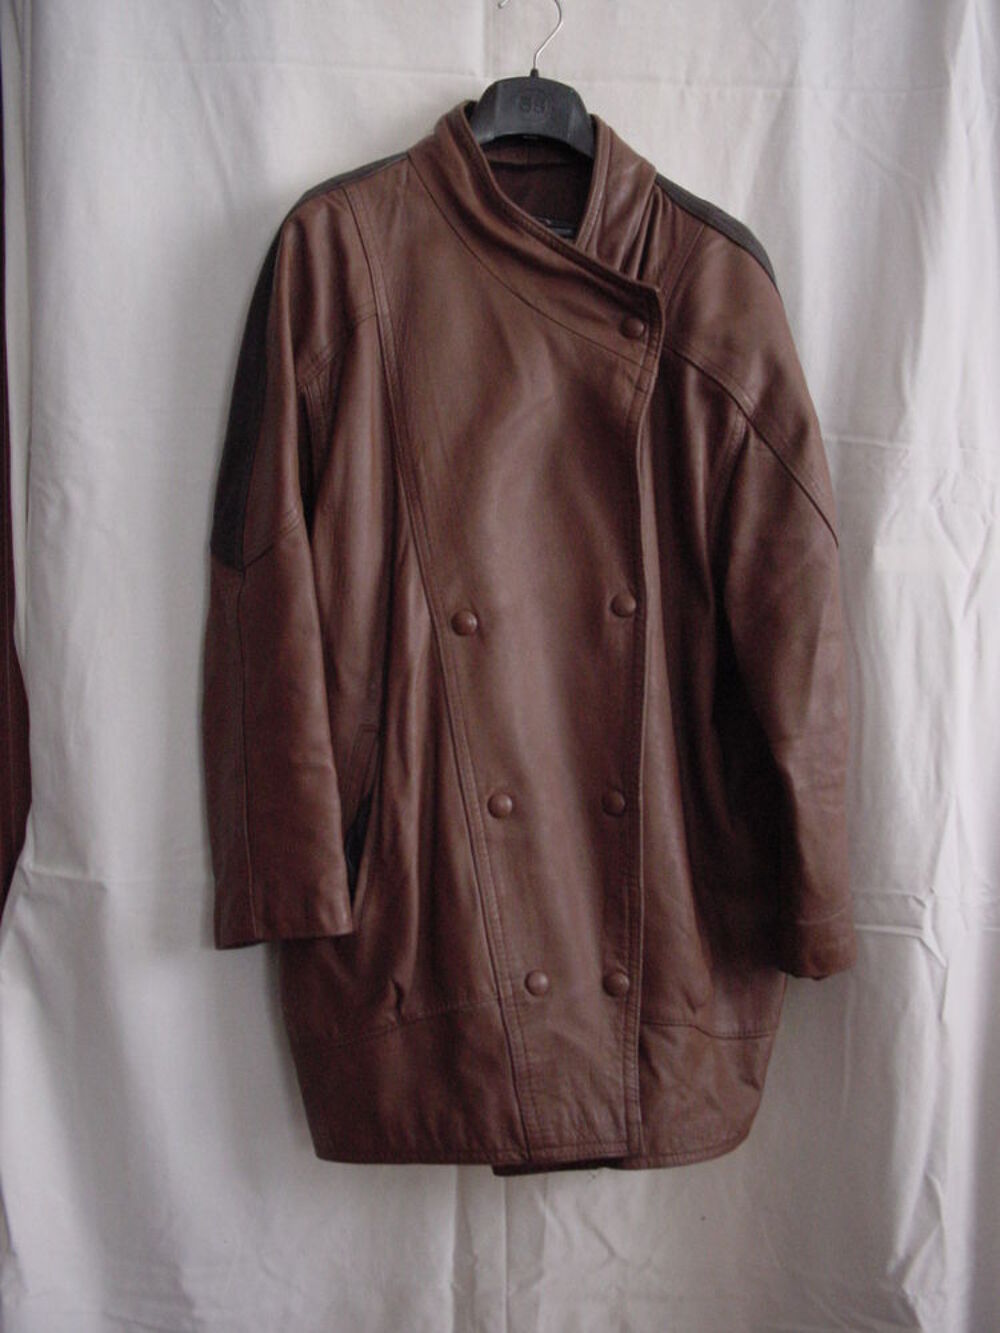 Veste cuir et manteau 3/4 cuir Maroquinerie